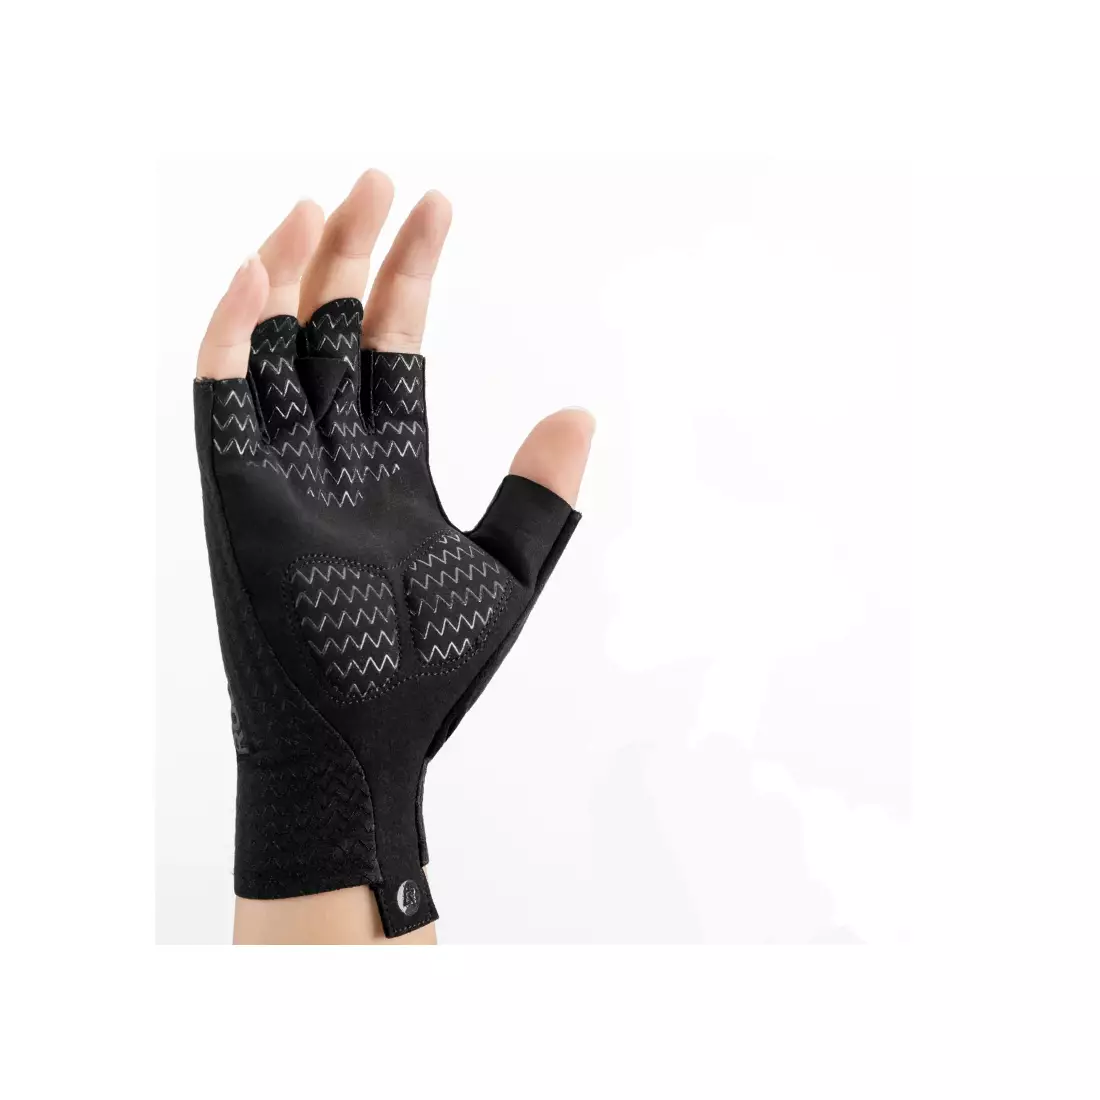 Rockbros cycling gloves short finger, black S221-BK